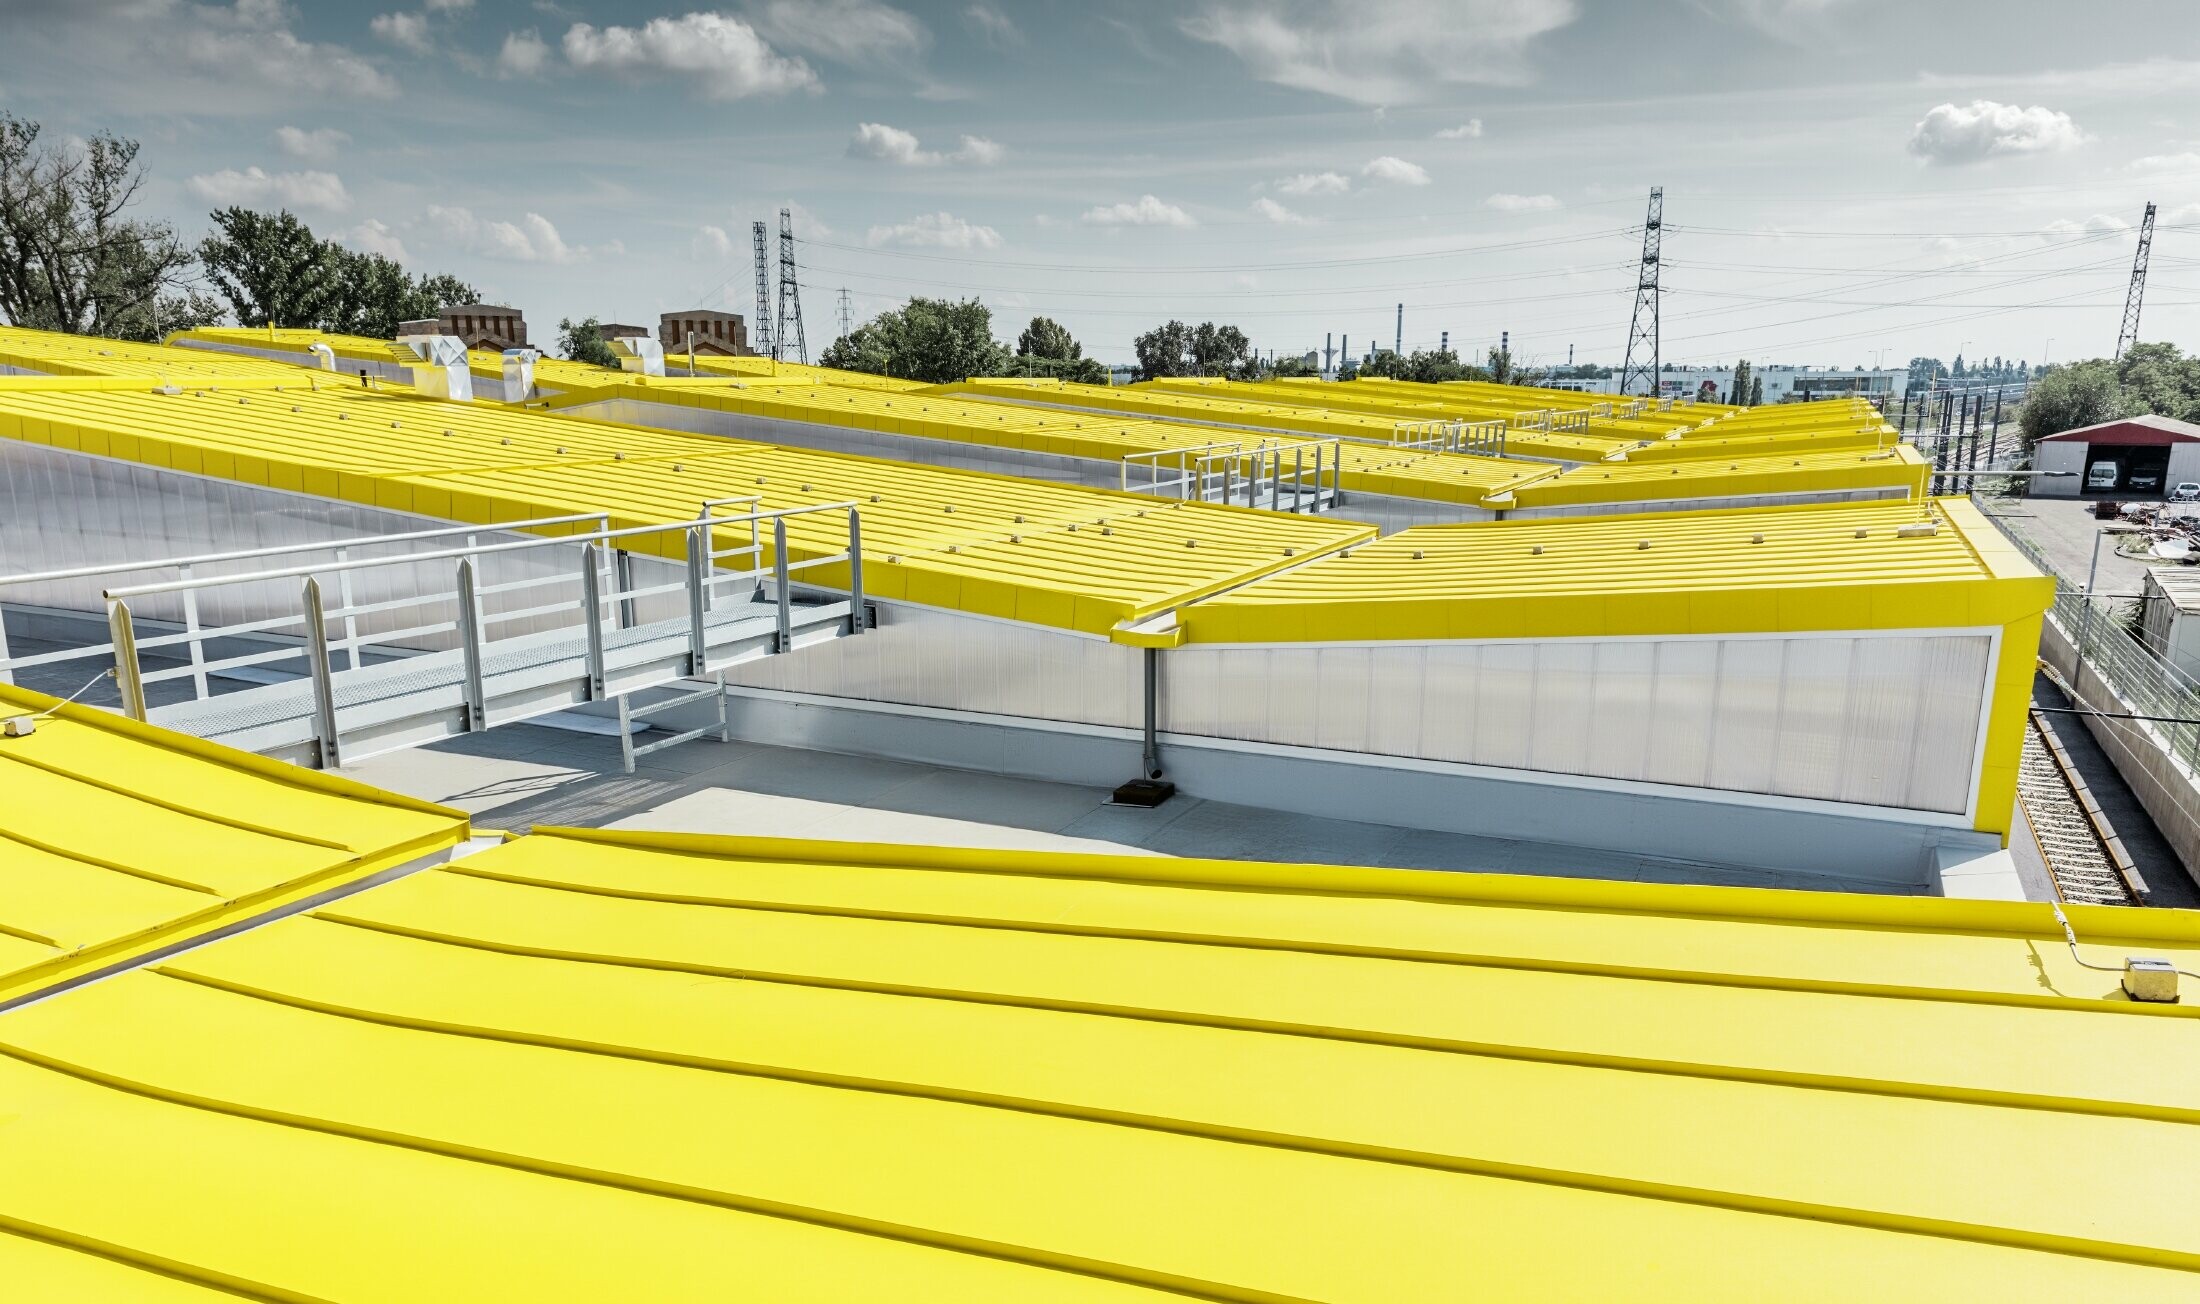 Prikaz detalja žute krovne površine nove budimpeštanske remize s krovom od stojećeg falca tvrtke PREFA;